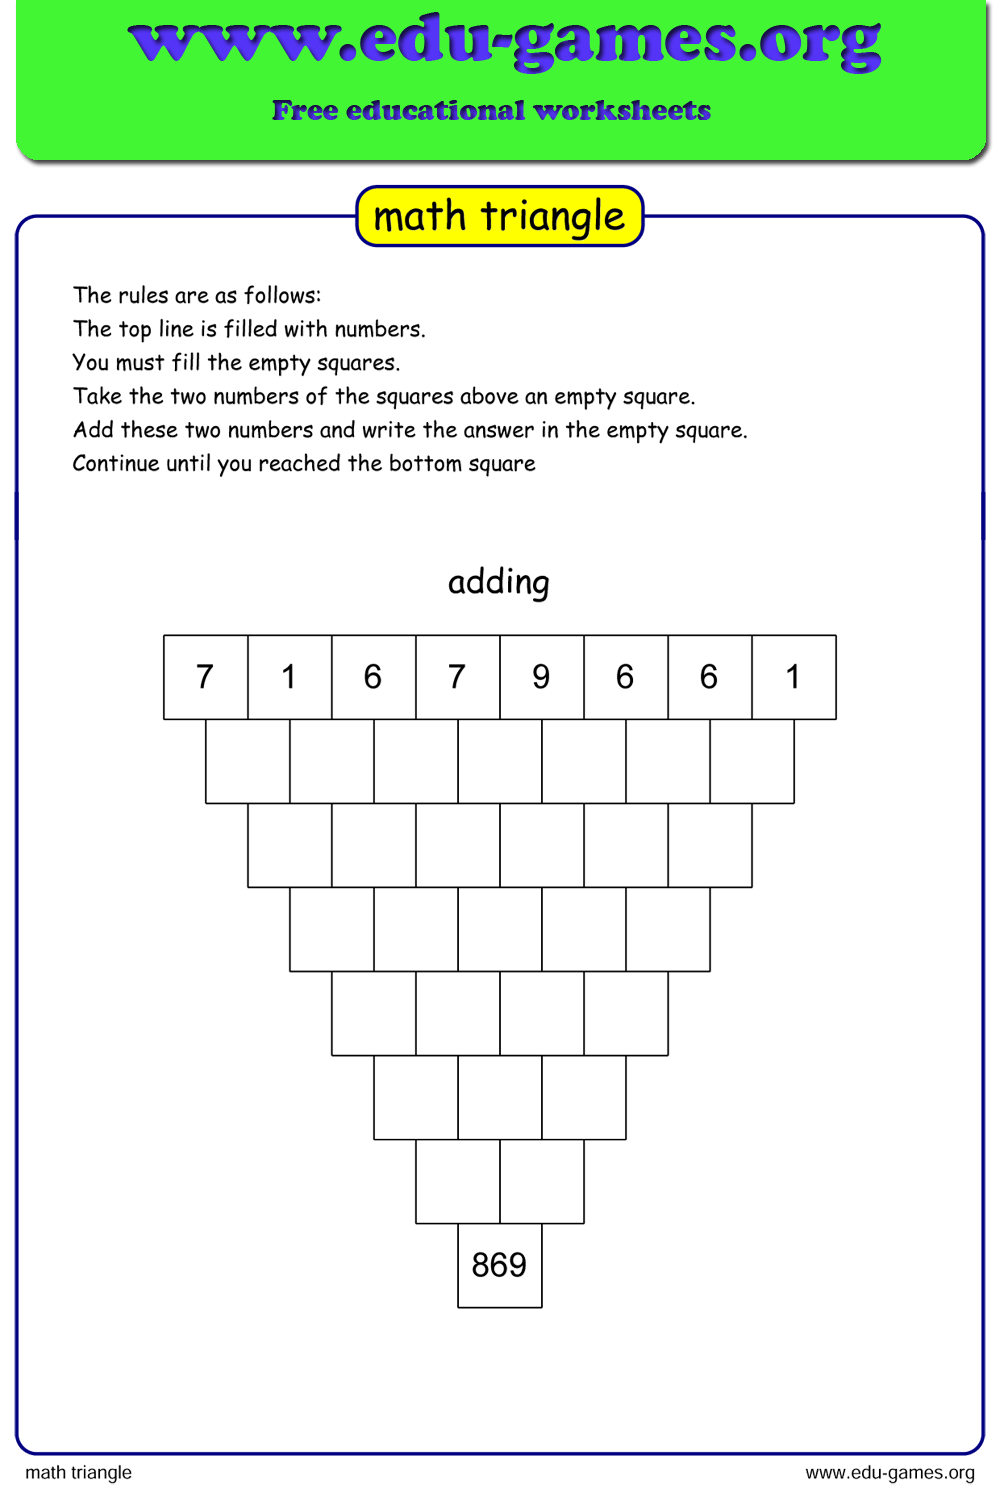 math triangle puzzle worksheet maker | edu-games.org